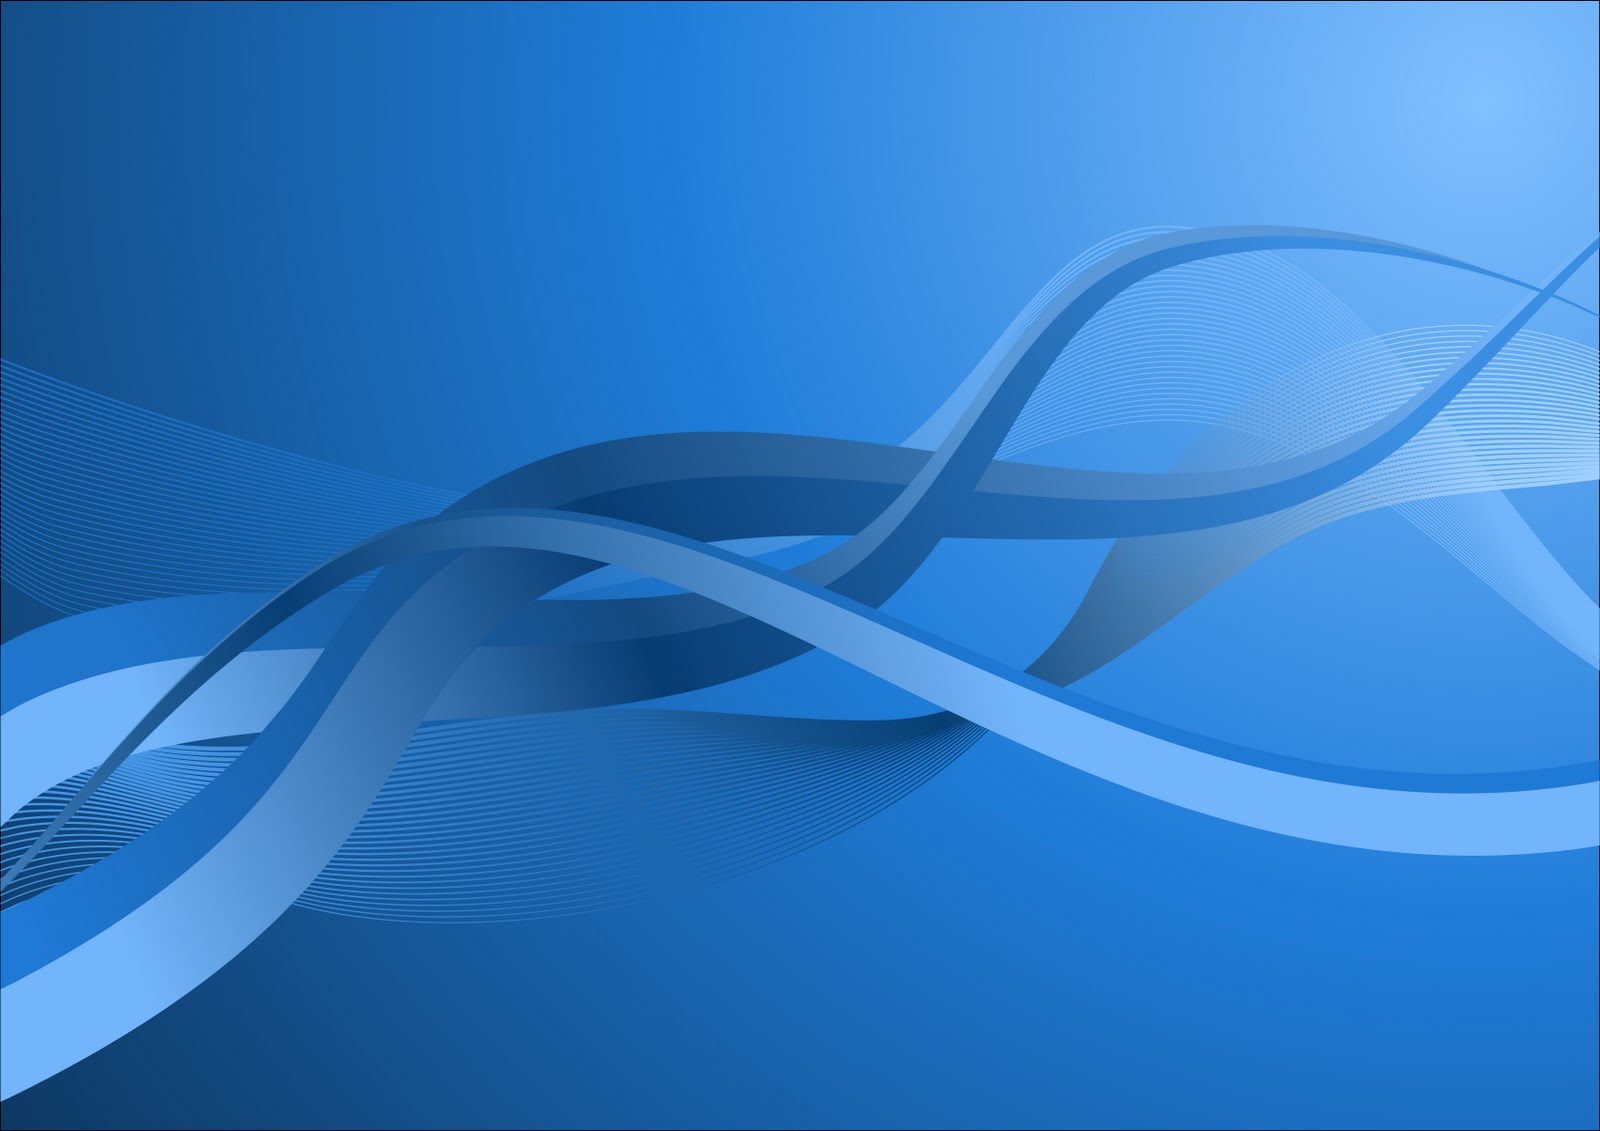  Acer Blue Desktop Wallpaper on this Top Quality Acer Wallpaper website